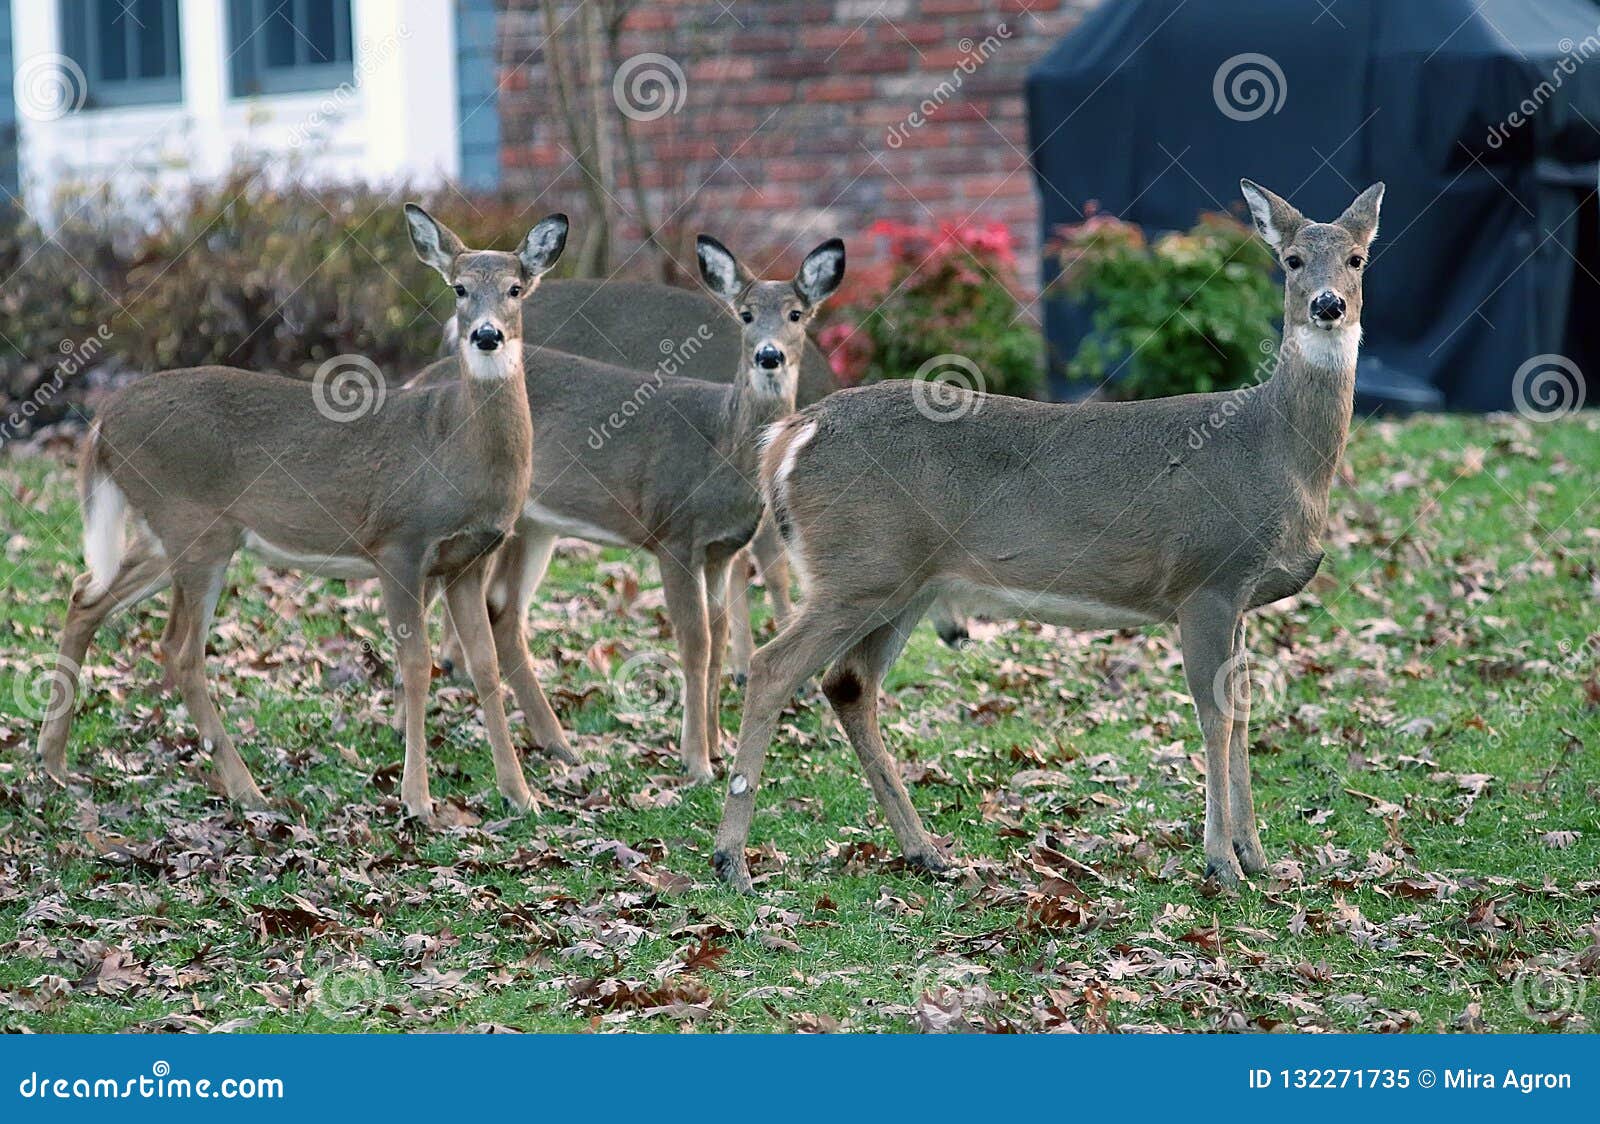 deer in suburban areas